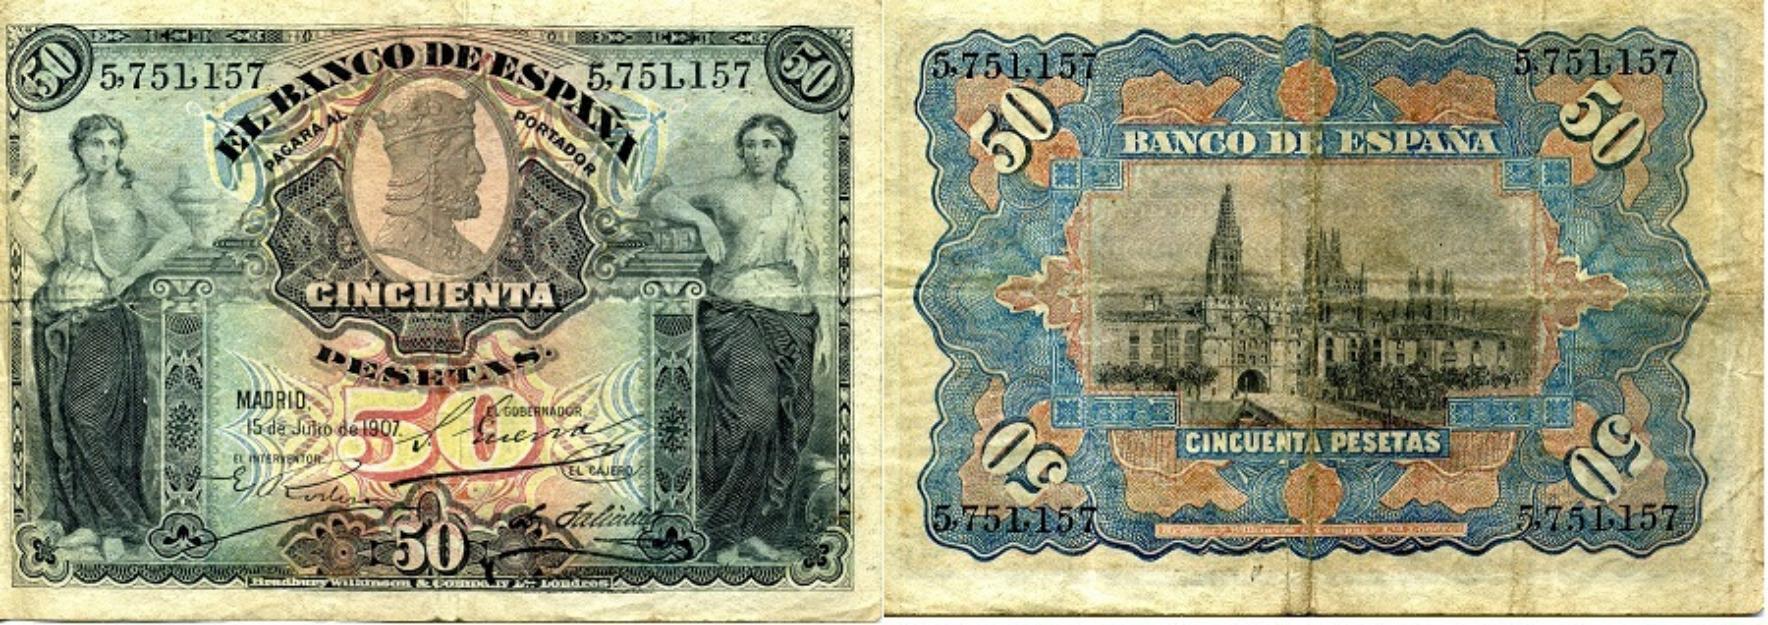 Billete antiguo barato 50 pesetas 15 julio 1907- 150€